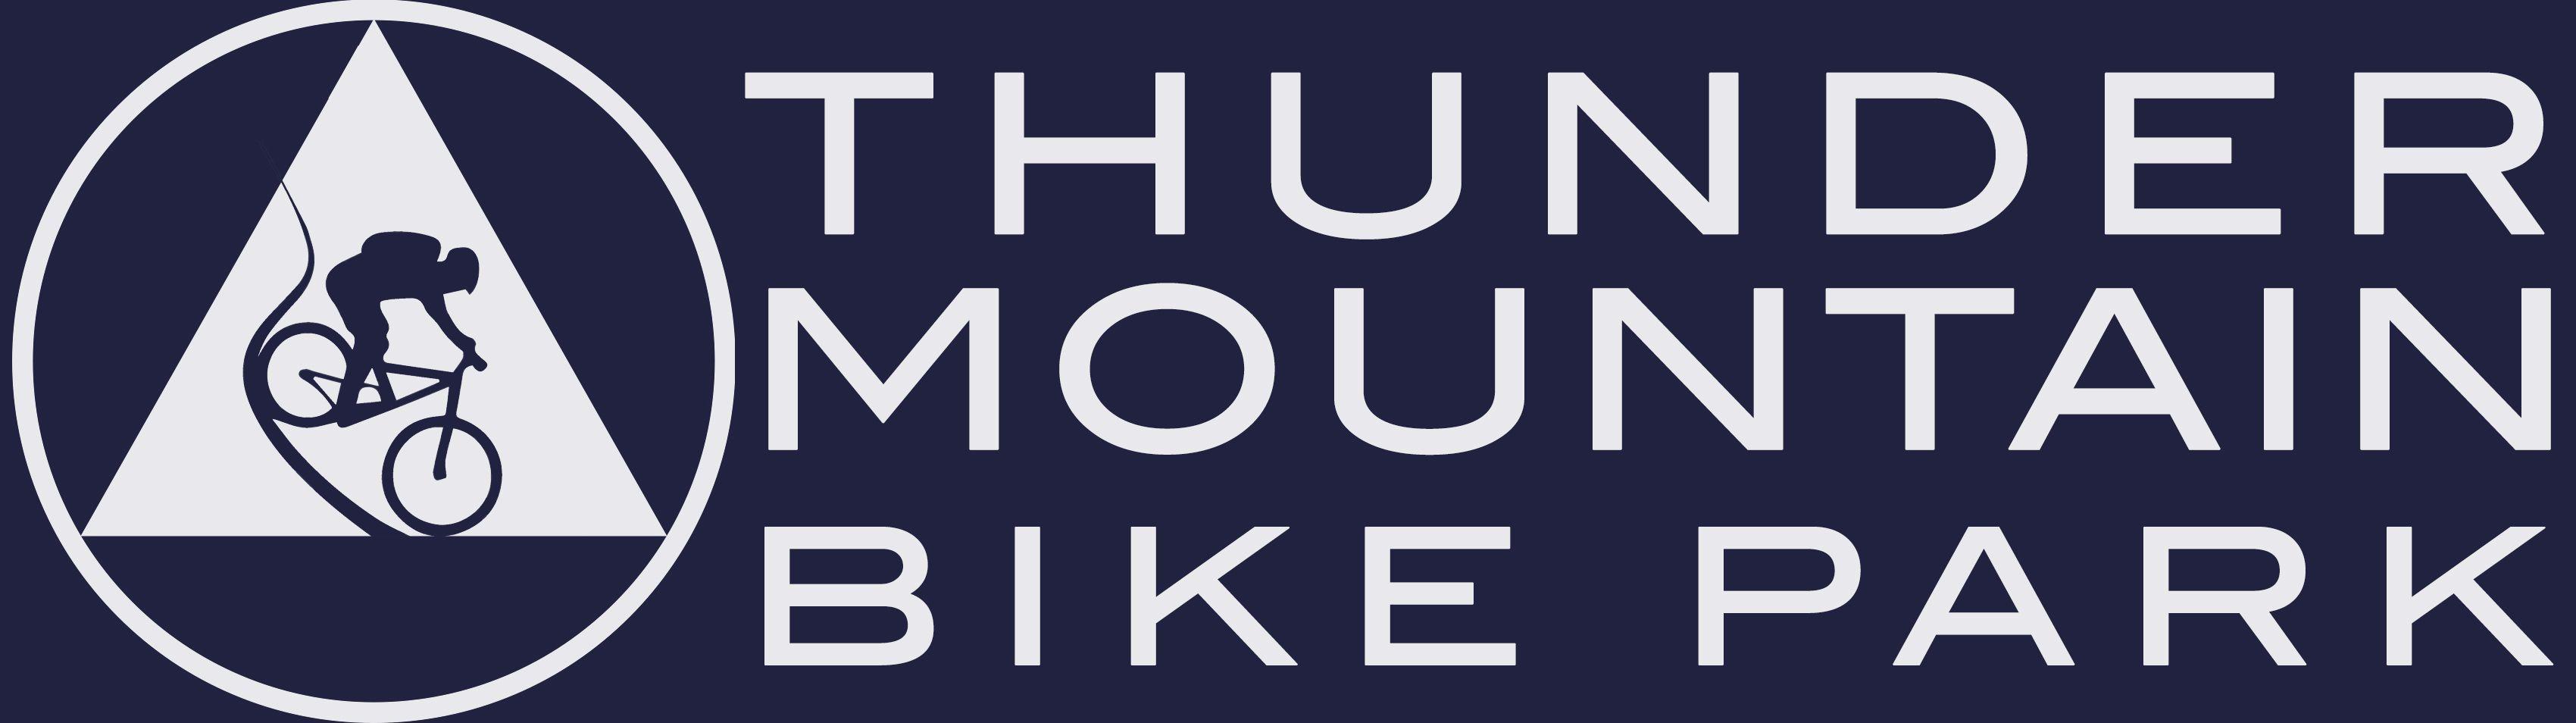 MTB Mountain Logo - Home Mountain Bike Park